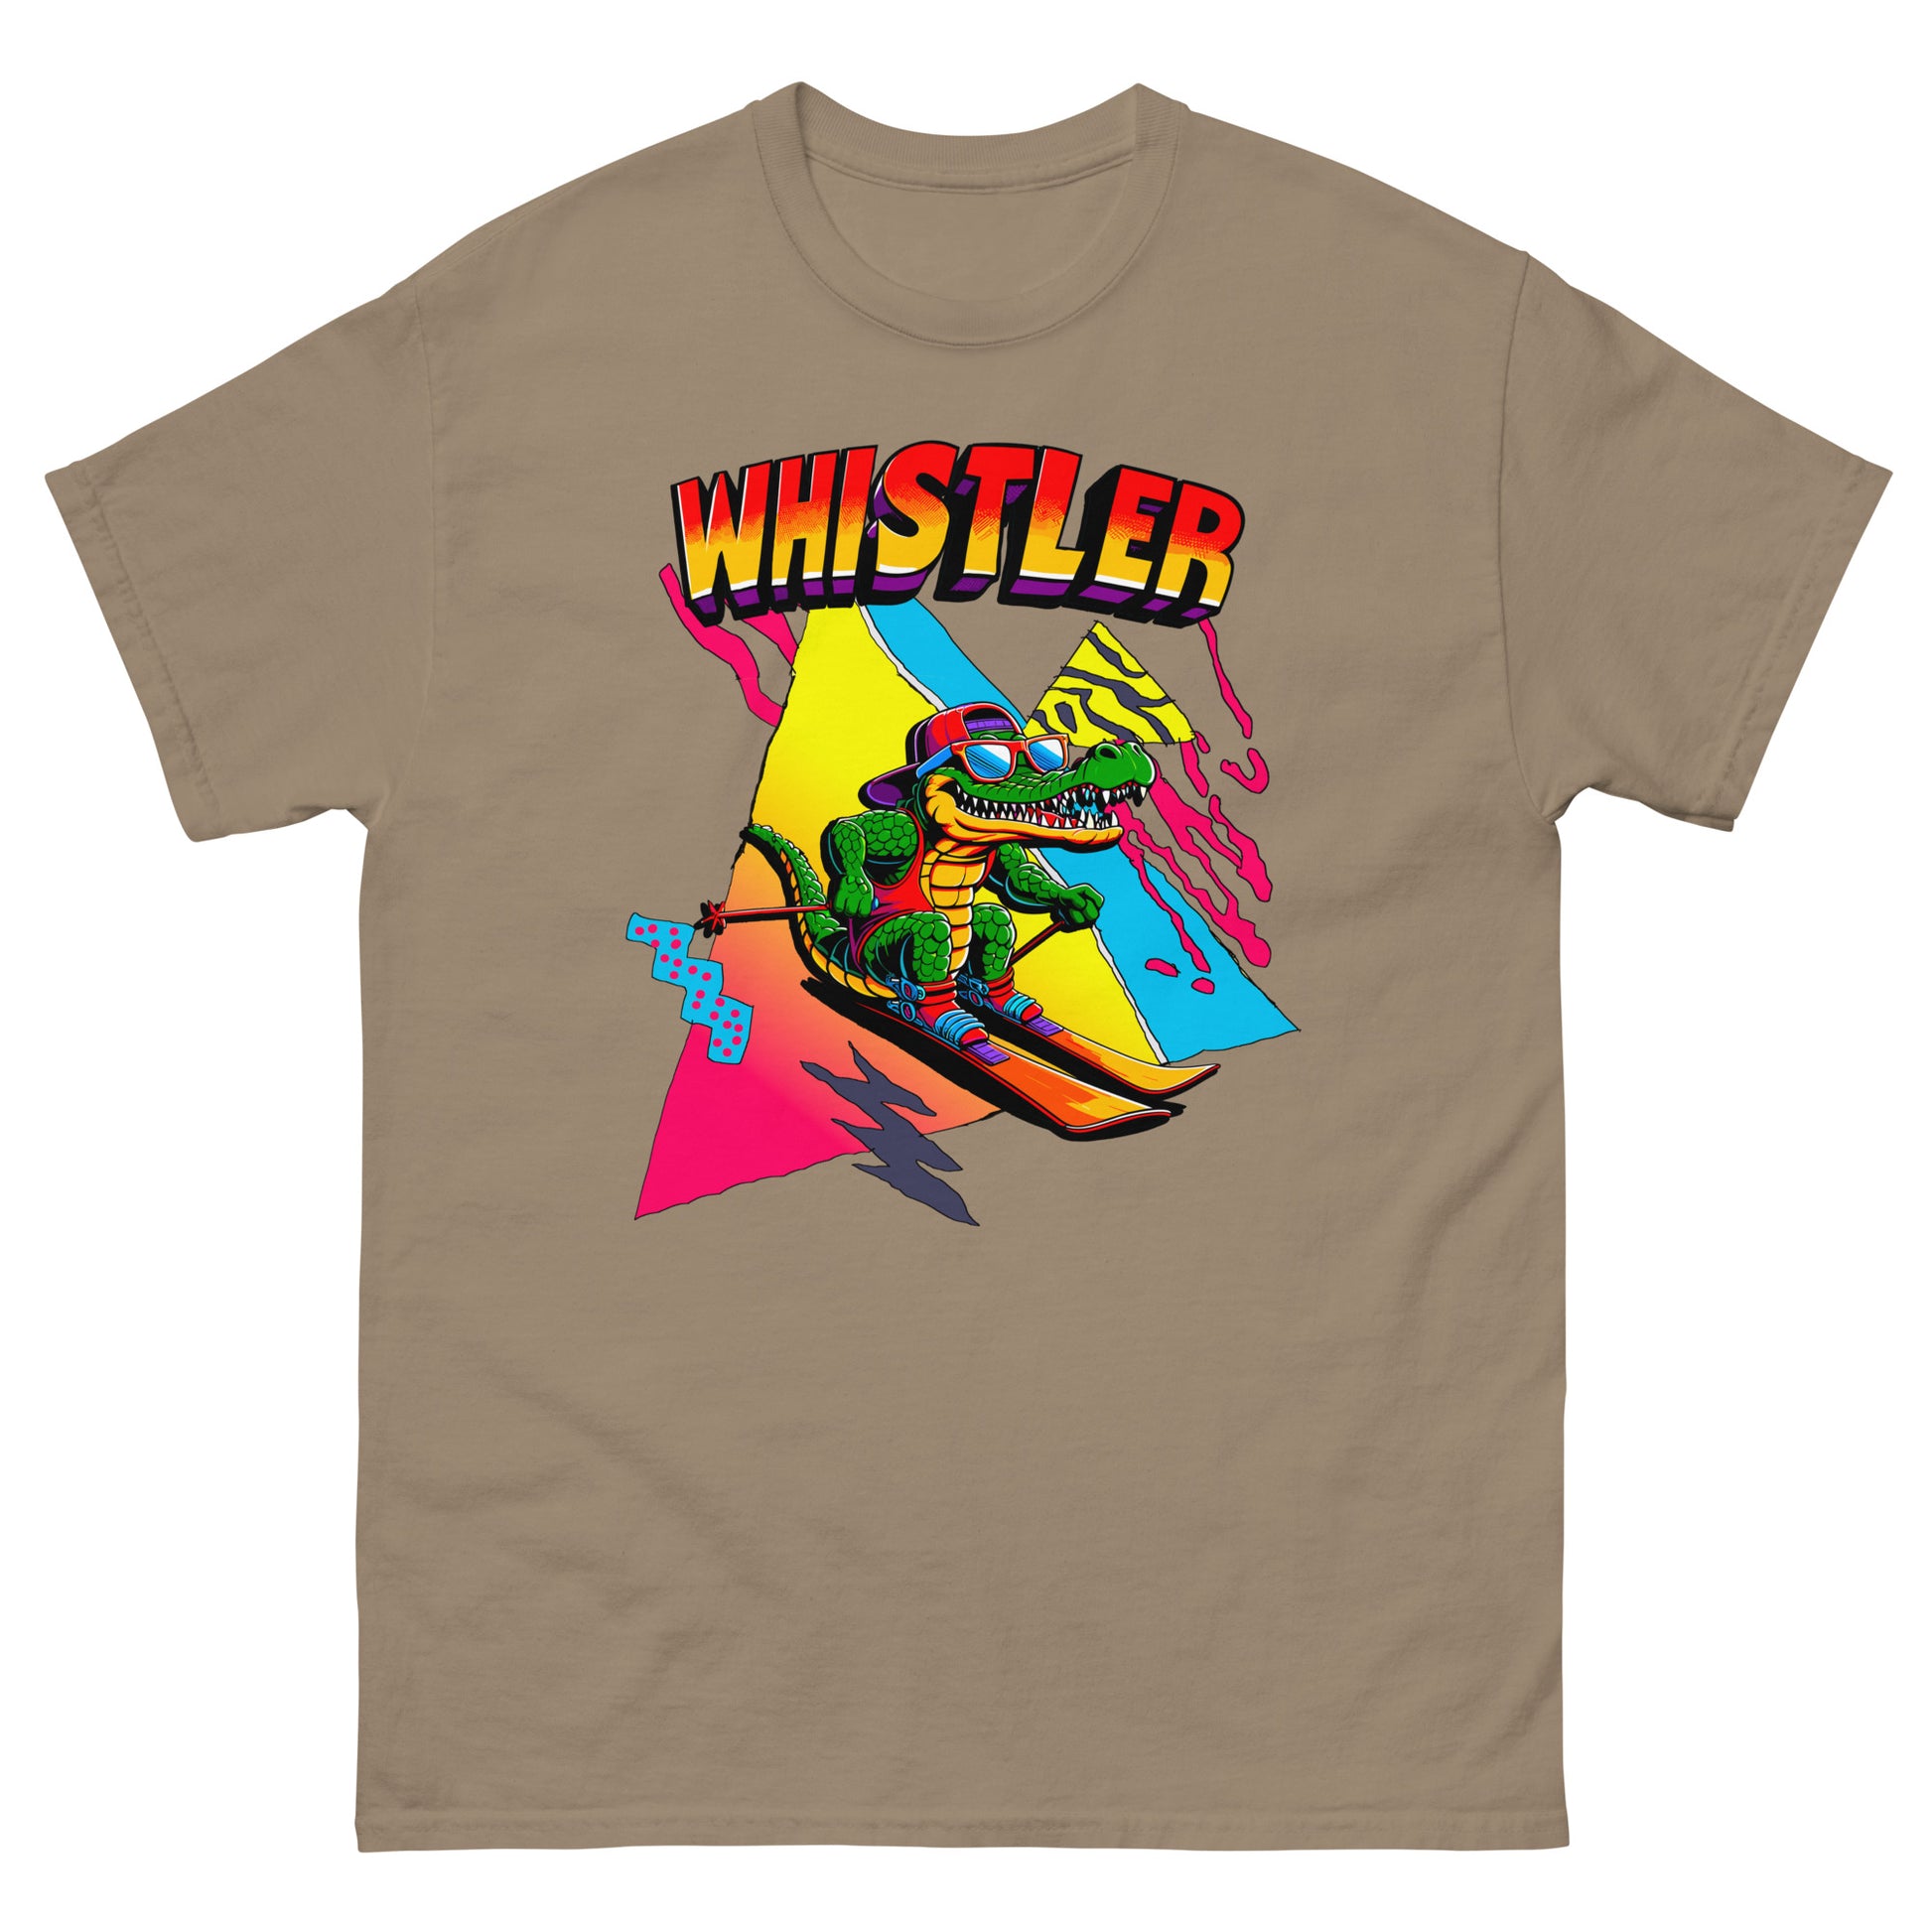 Whistler Skiing Gator Retro T-shirt printed by Whistler Shirts